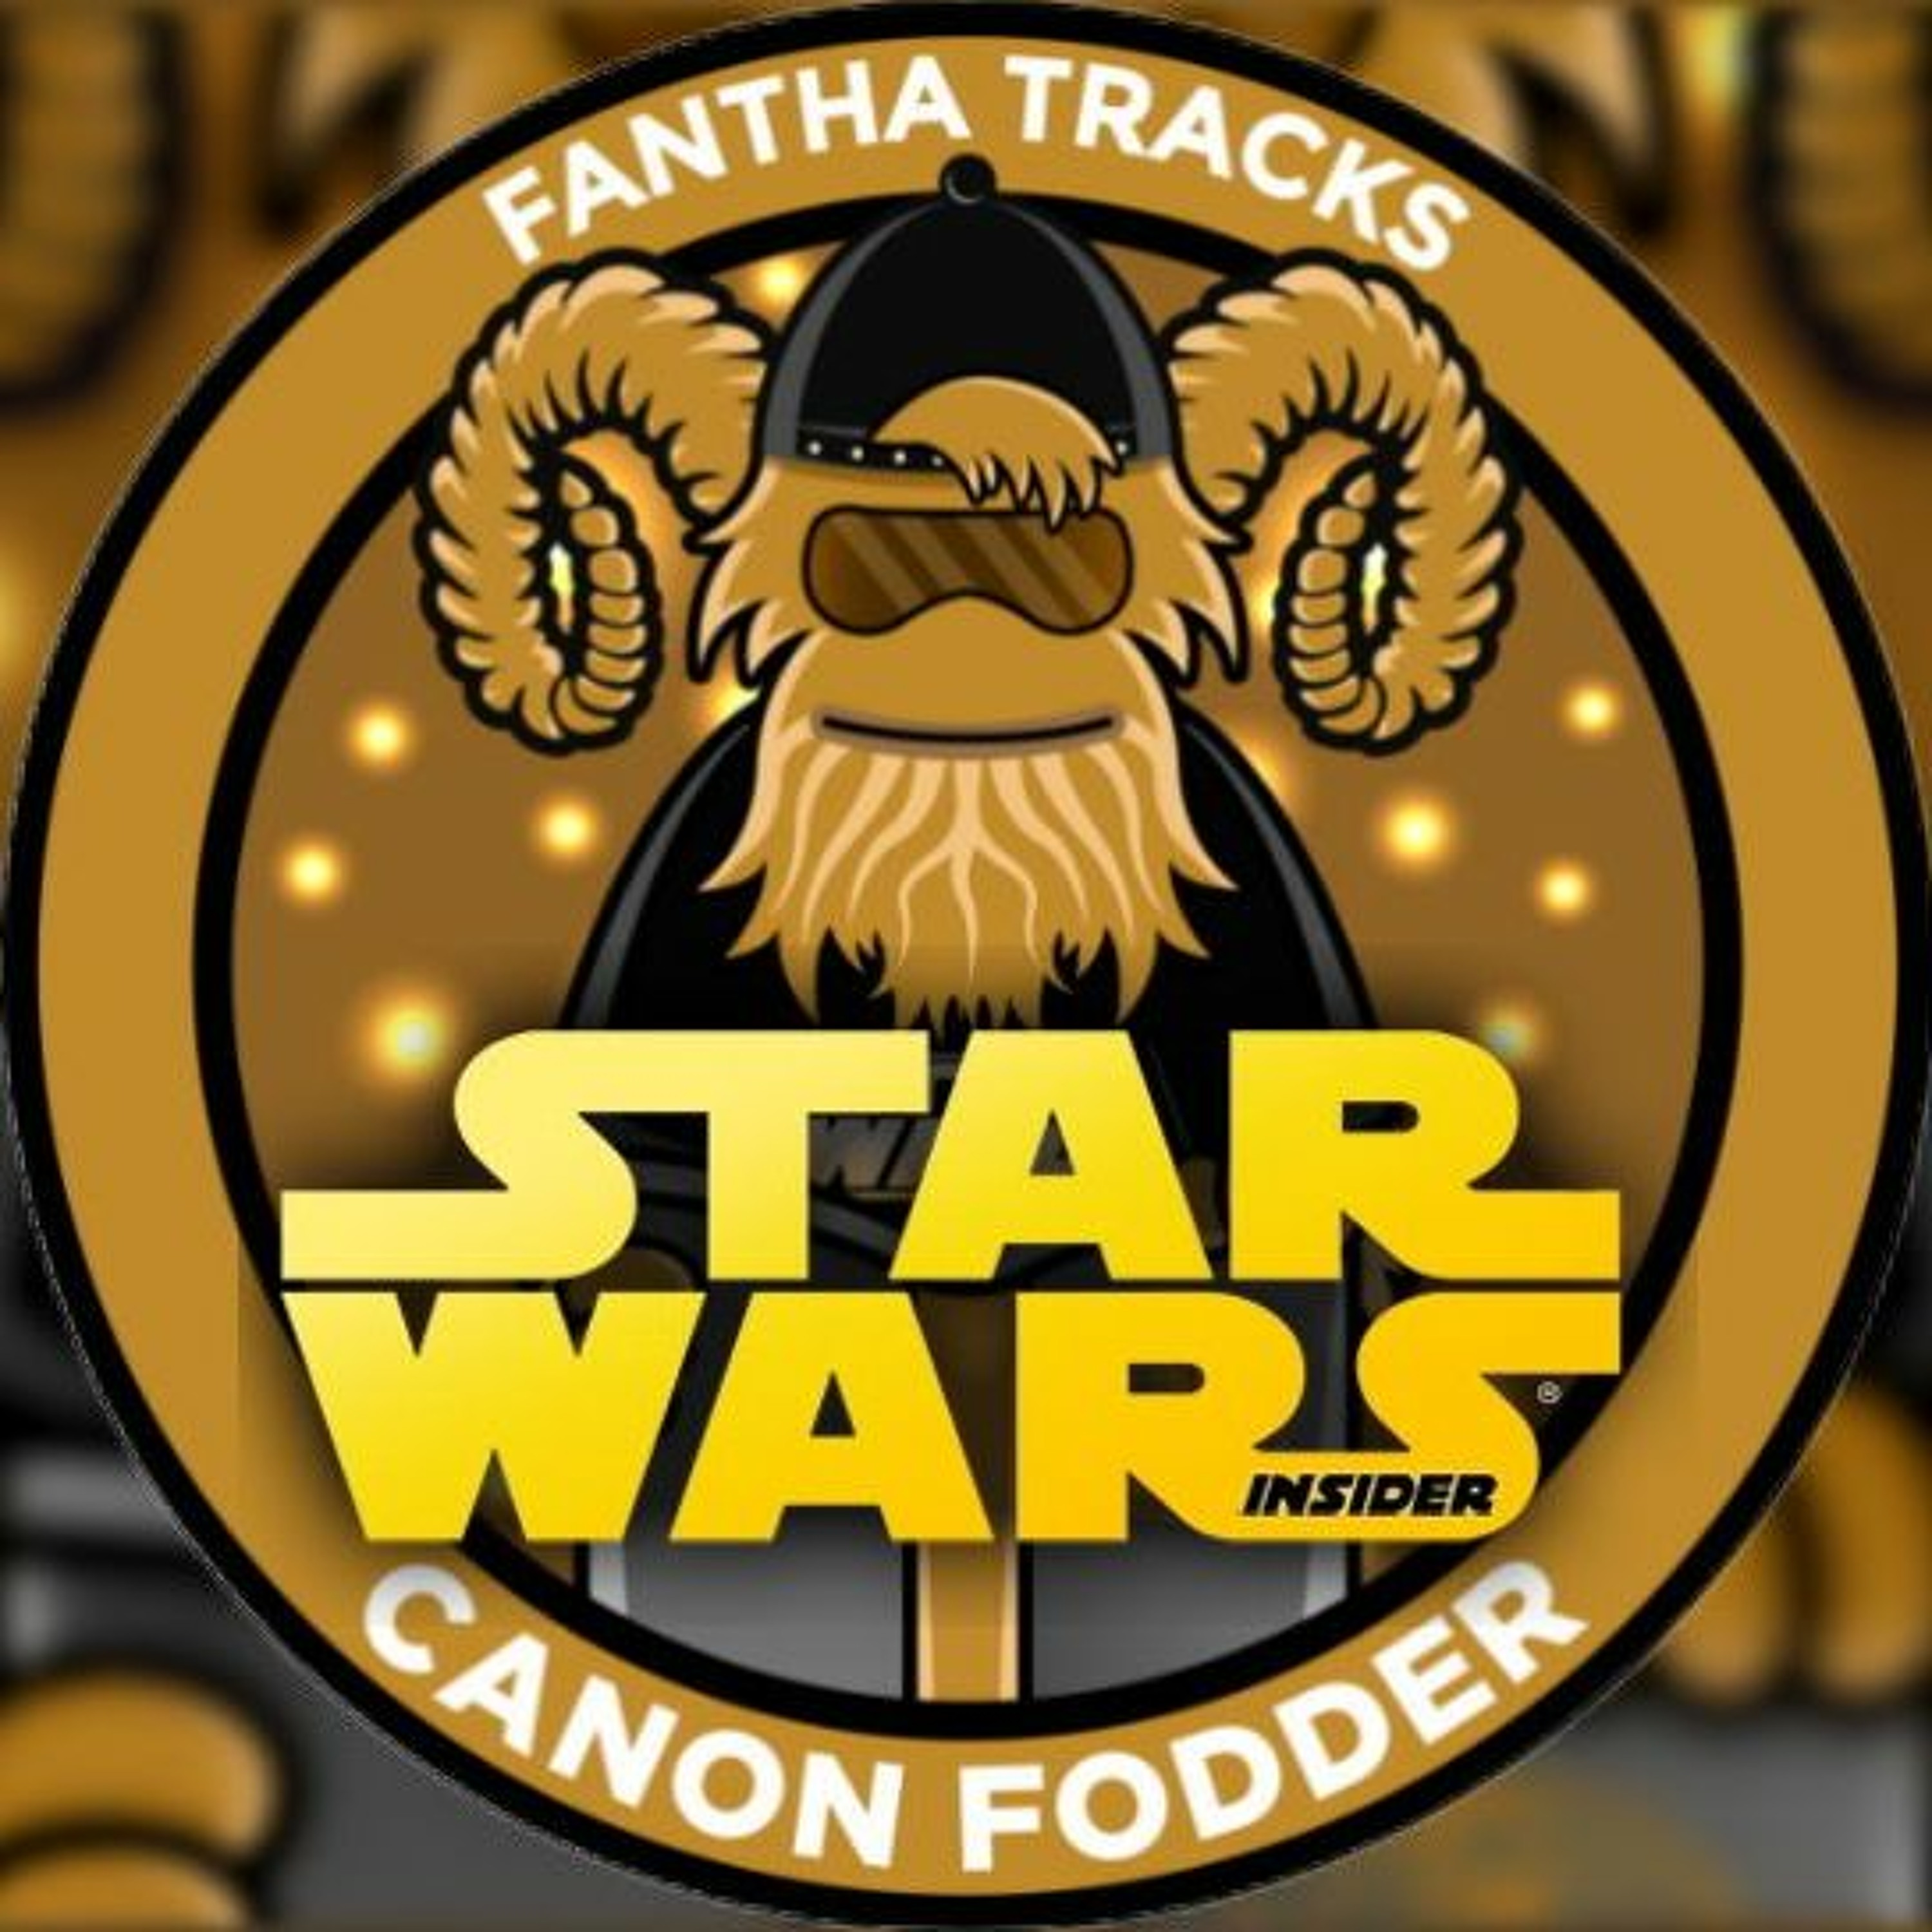 Canon Fodder: In conversation with Star Wars Insider editor Chris Cooper